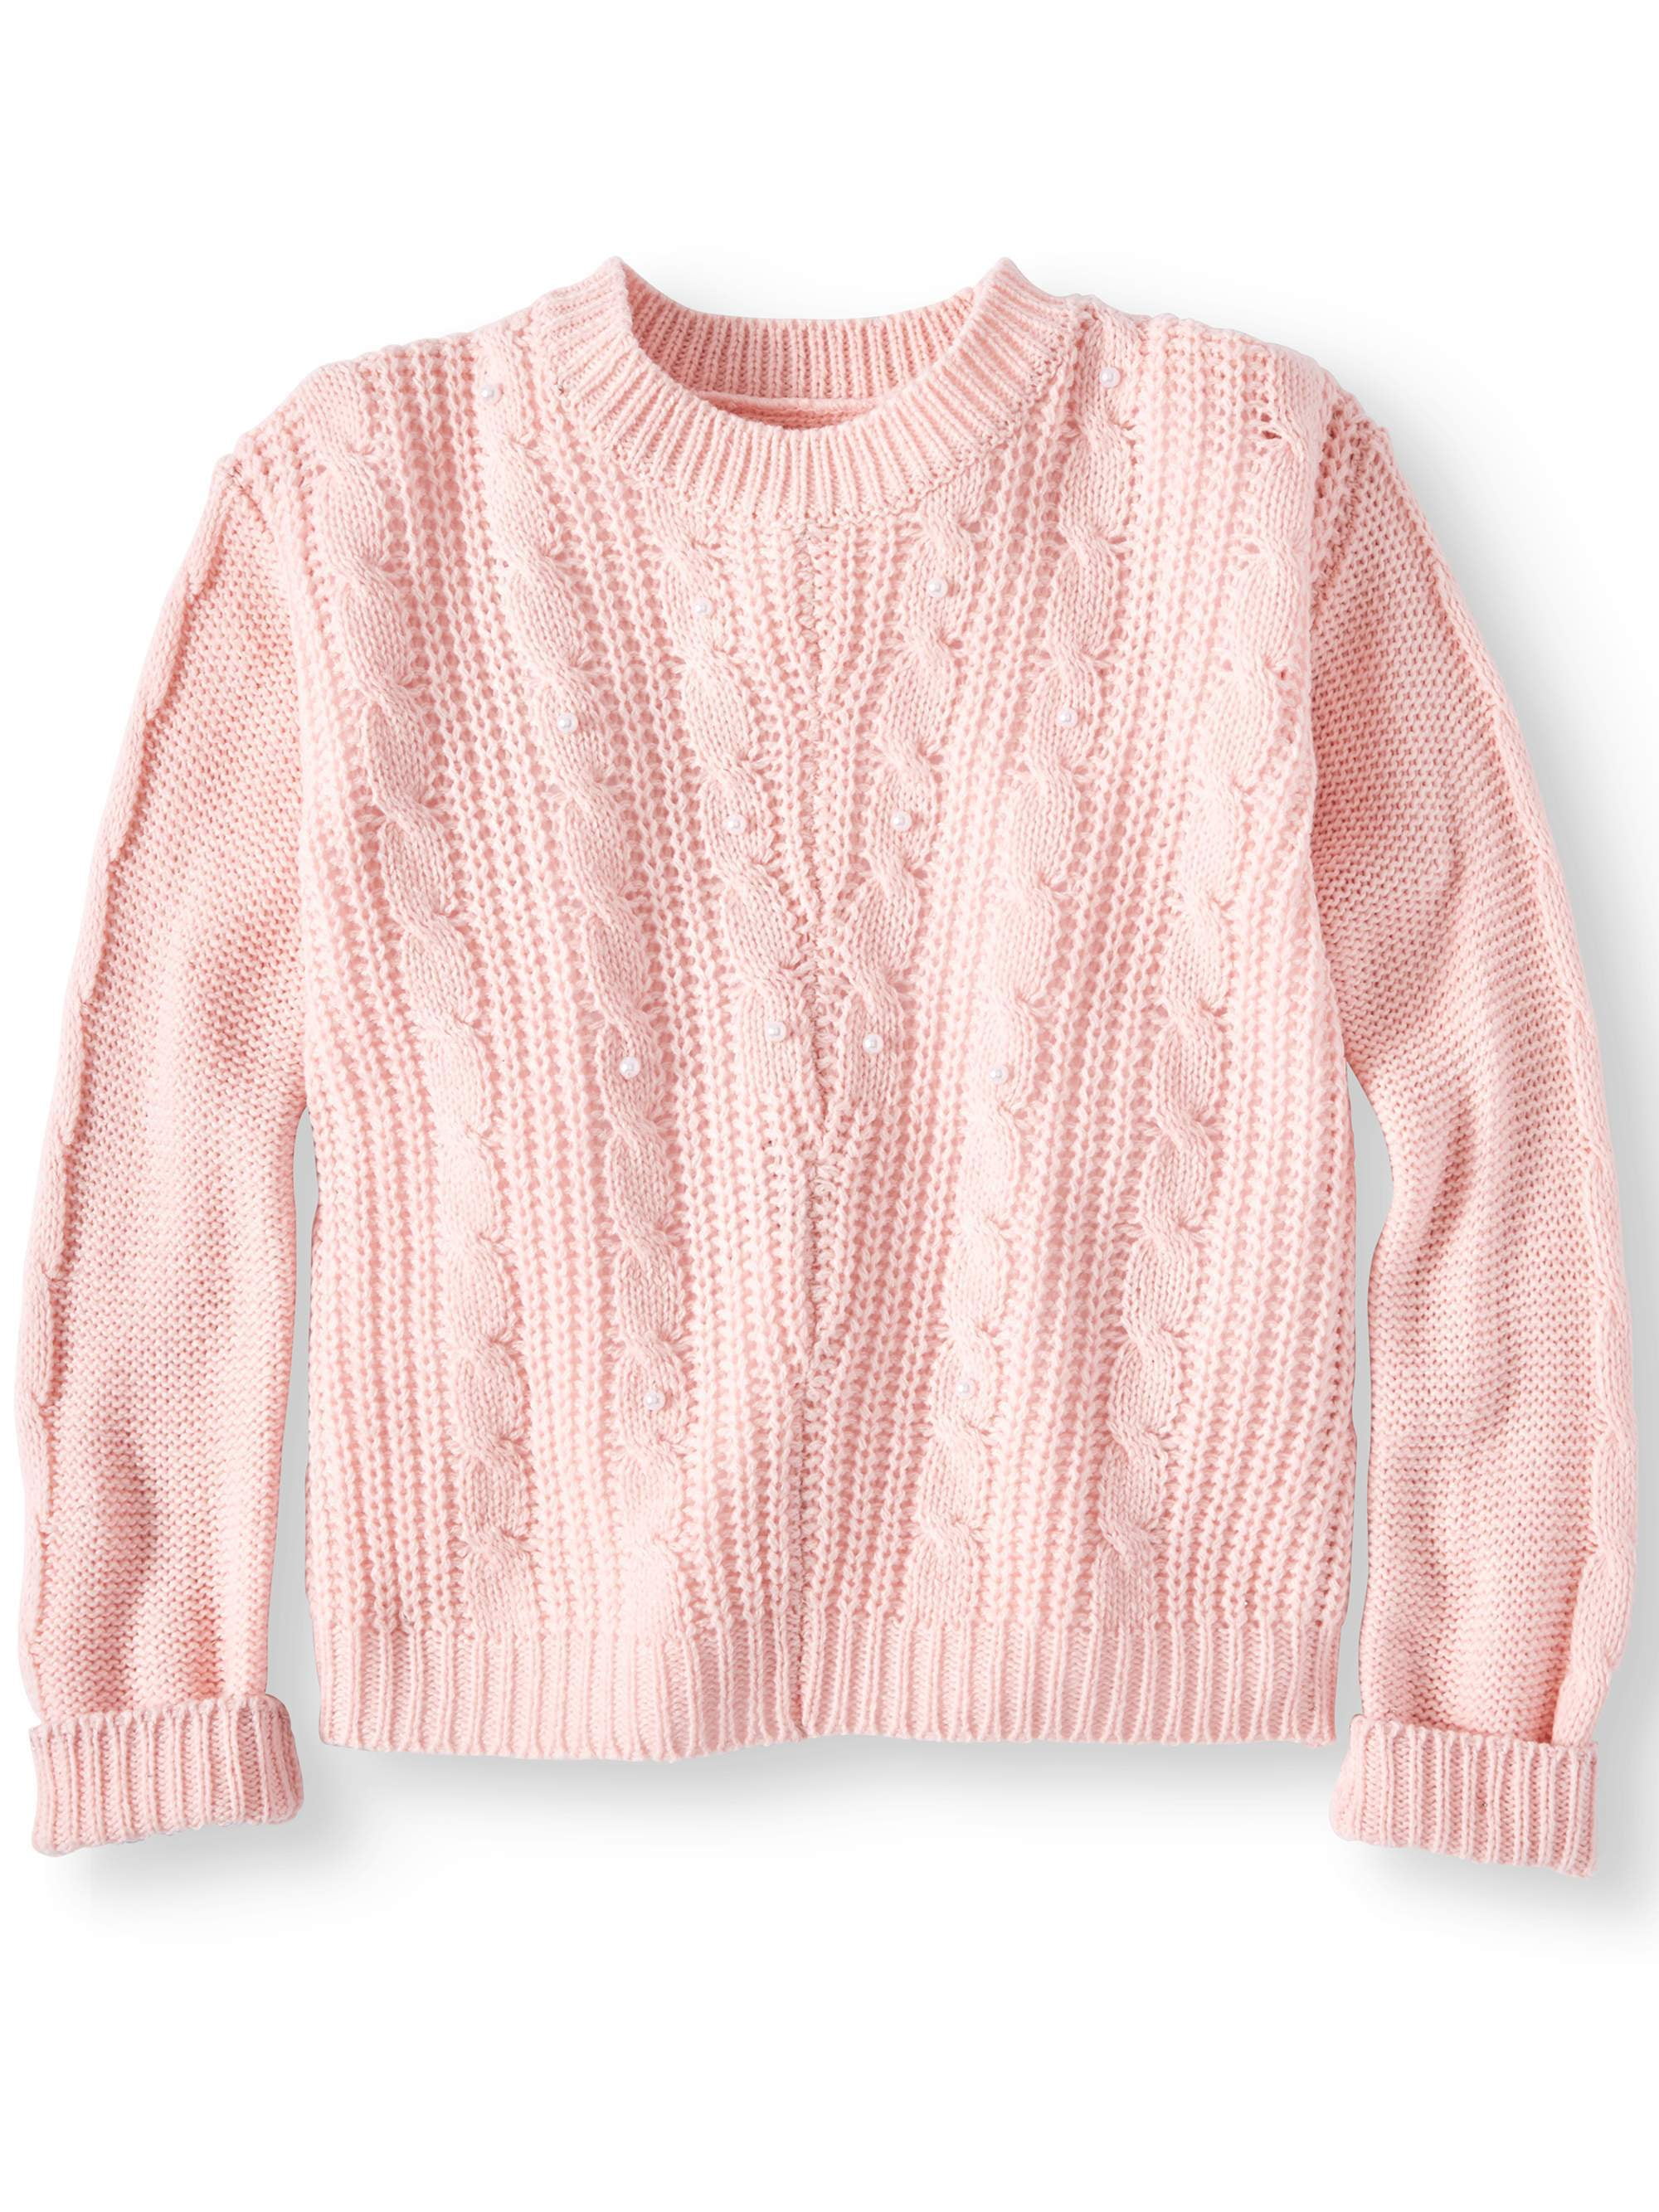 Pink Angel Girls School Uniform Open Cardigan Sweater